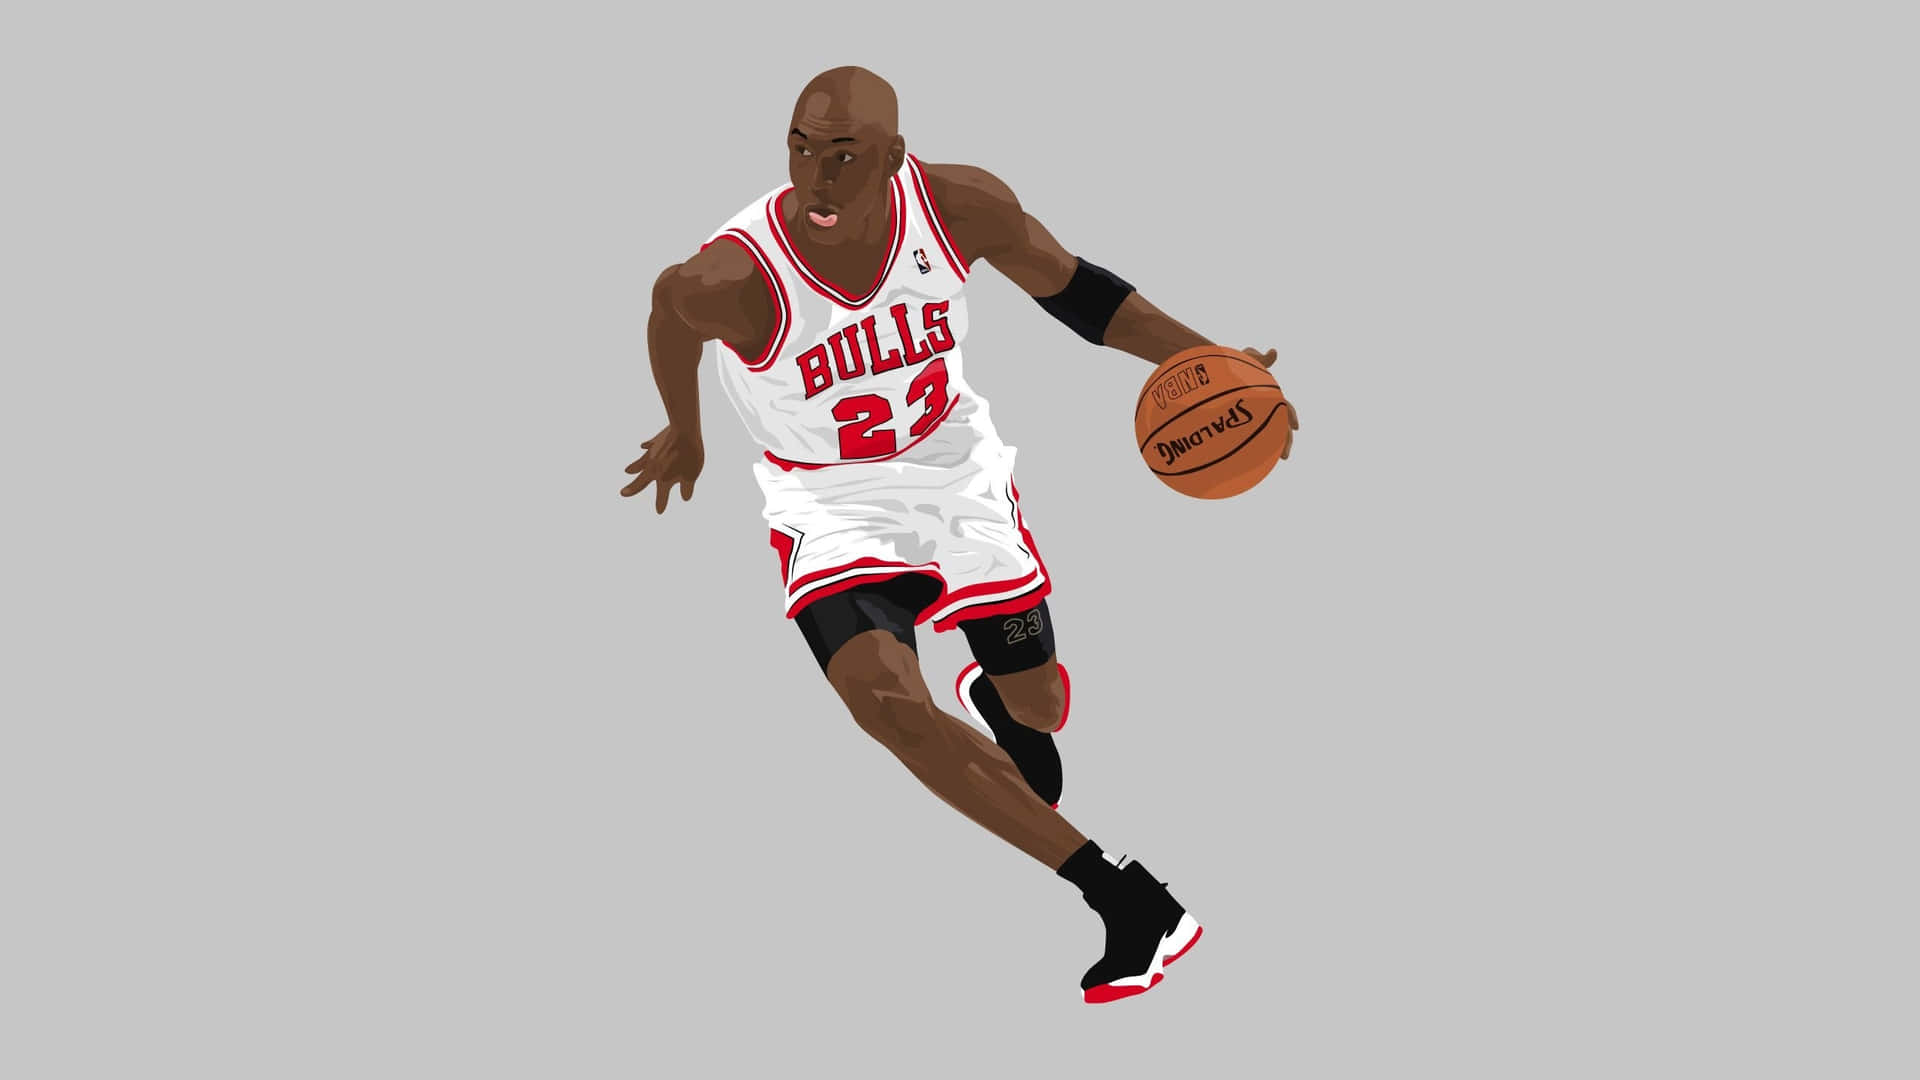 Michael Jordan elevates to the rim during a basketball game Wallpaper